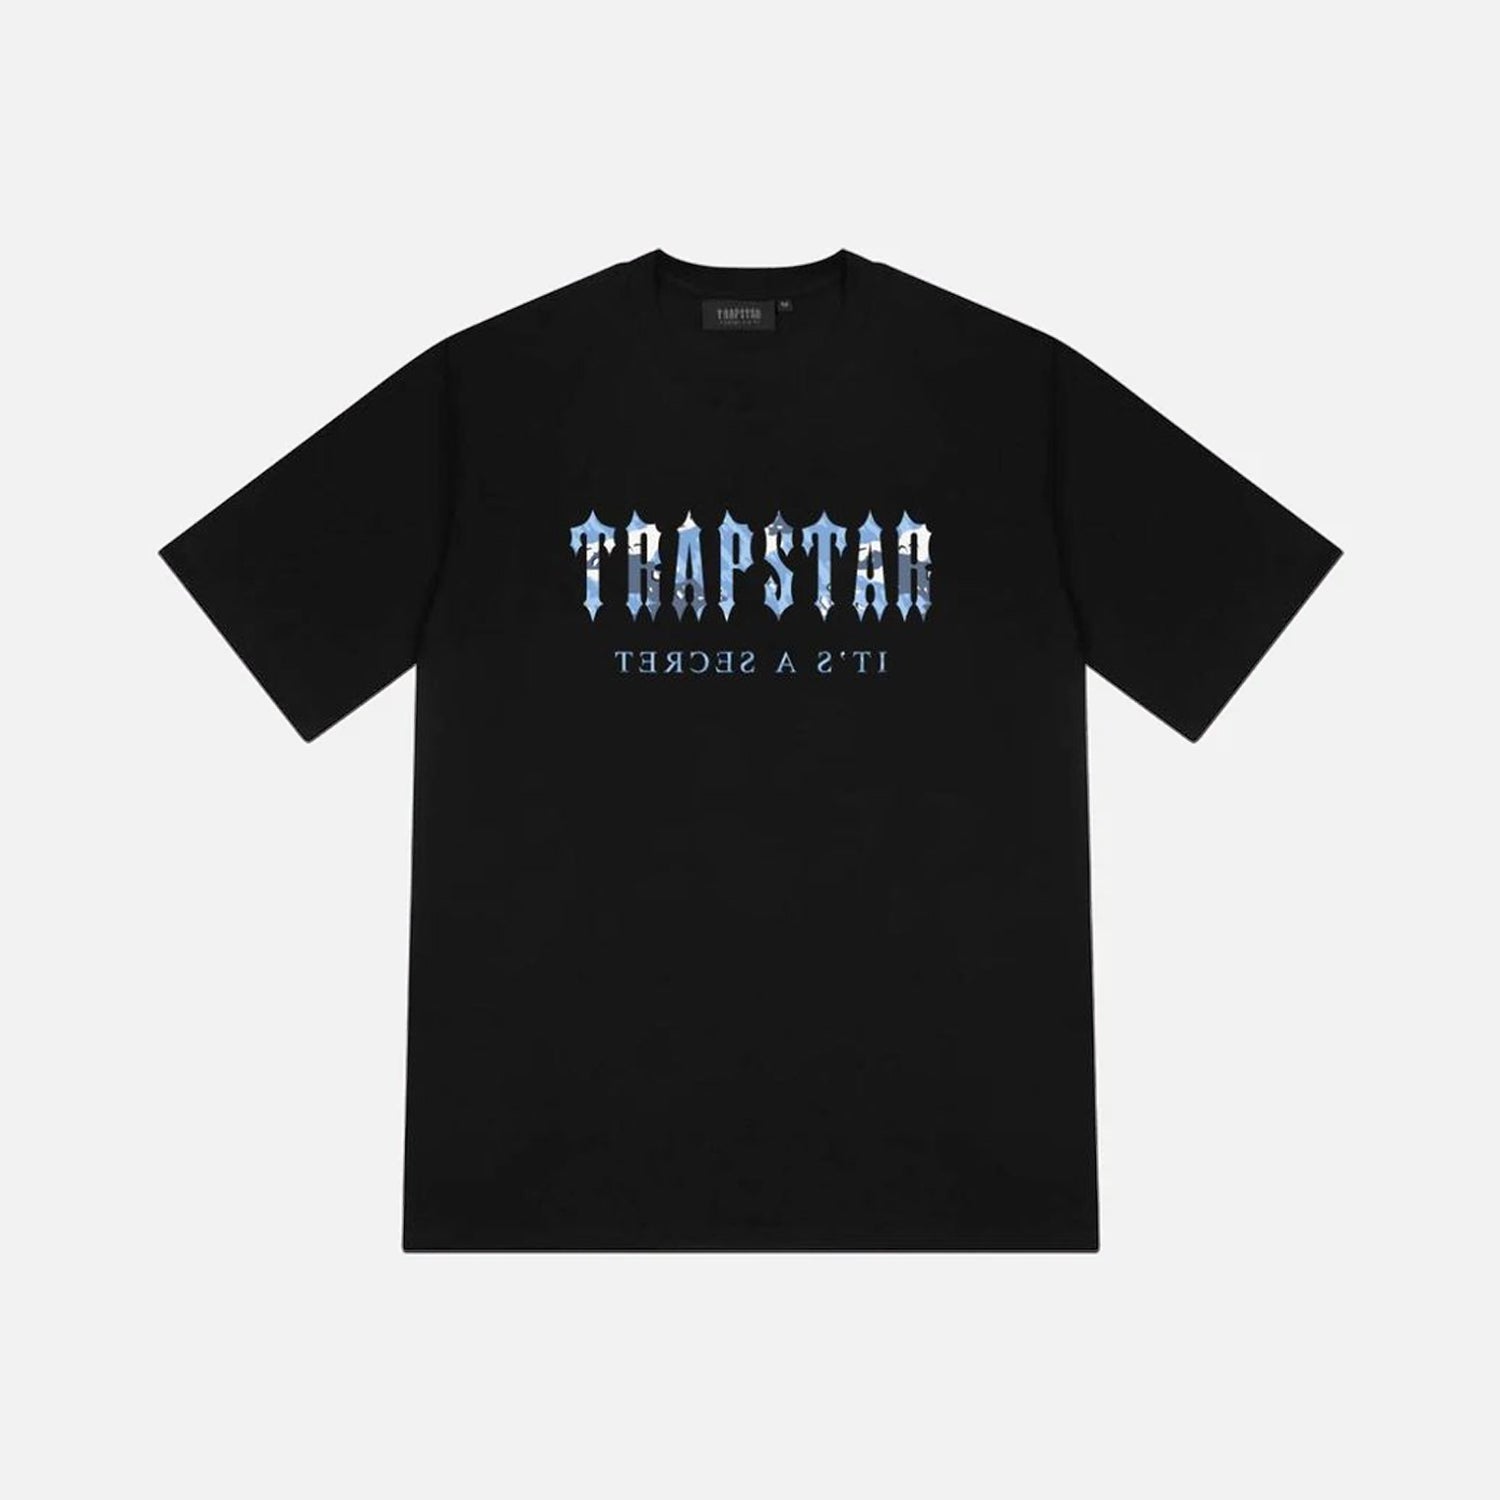 Trapstar Decoded T-Shirt - Black / Blue Camo